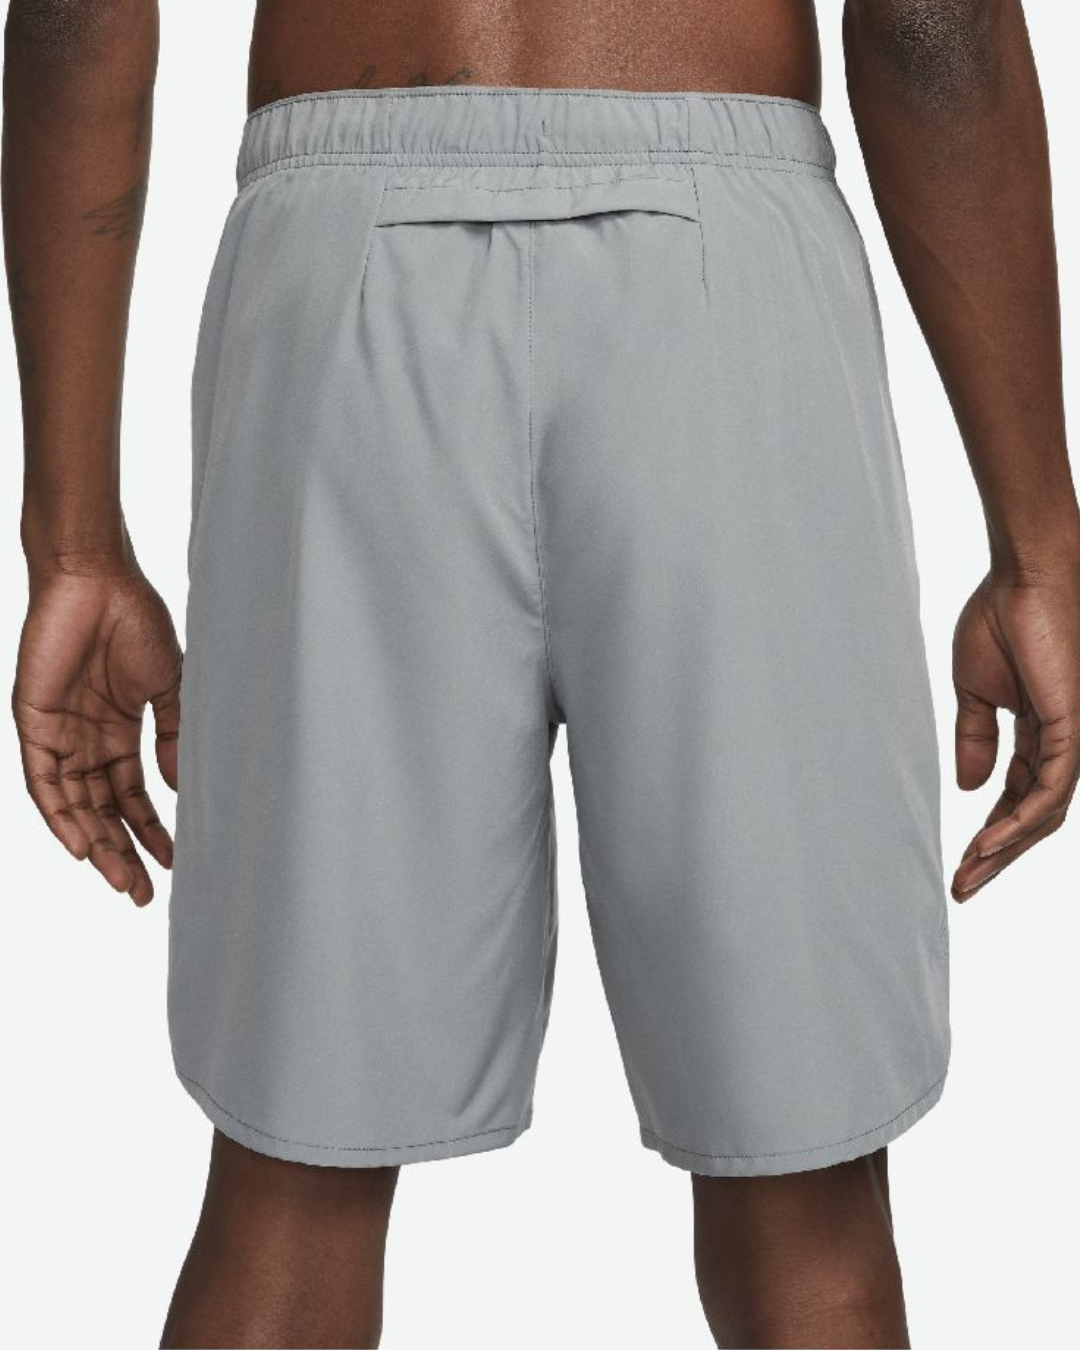 Nike Challenger Shorts - Gray